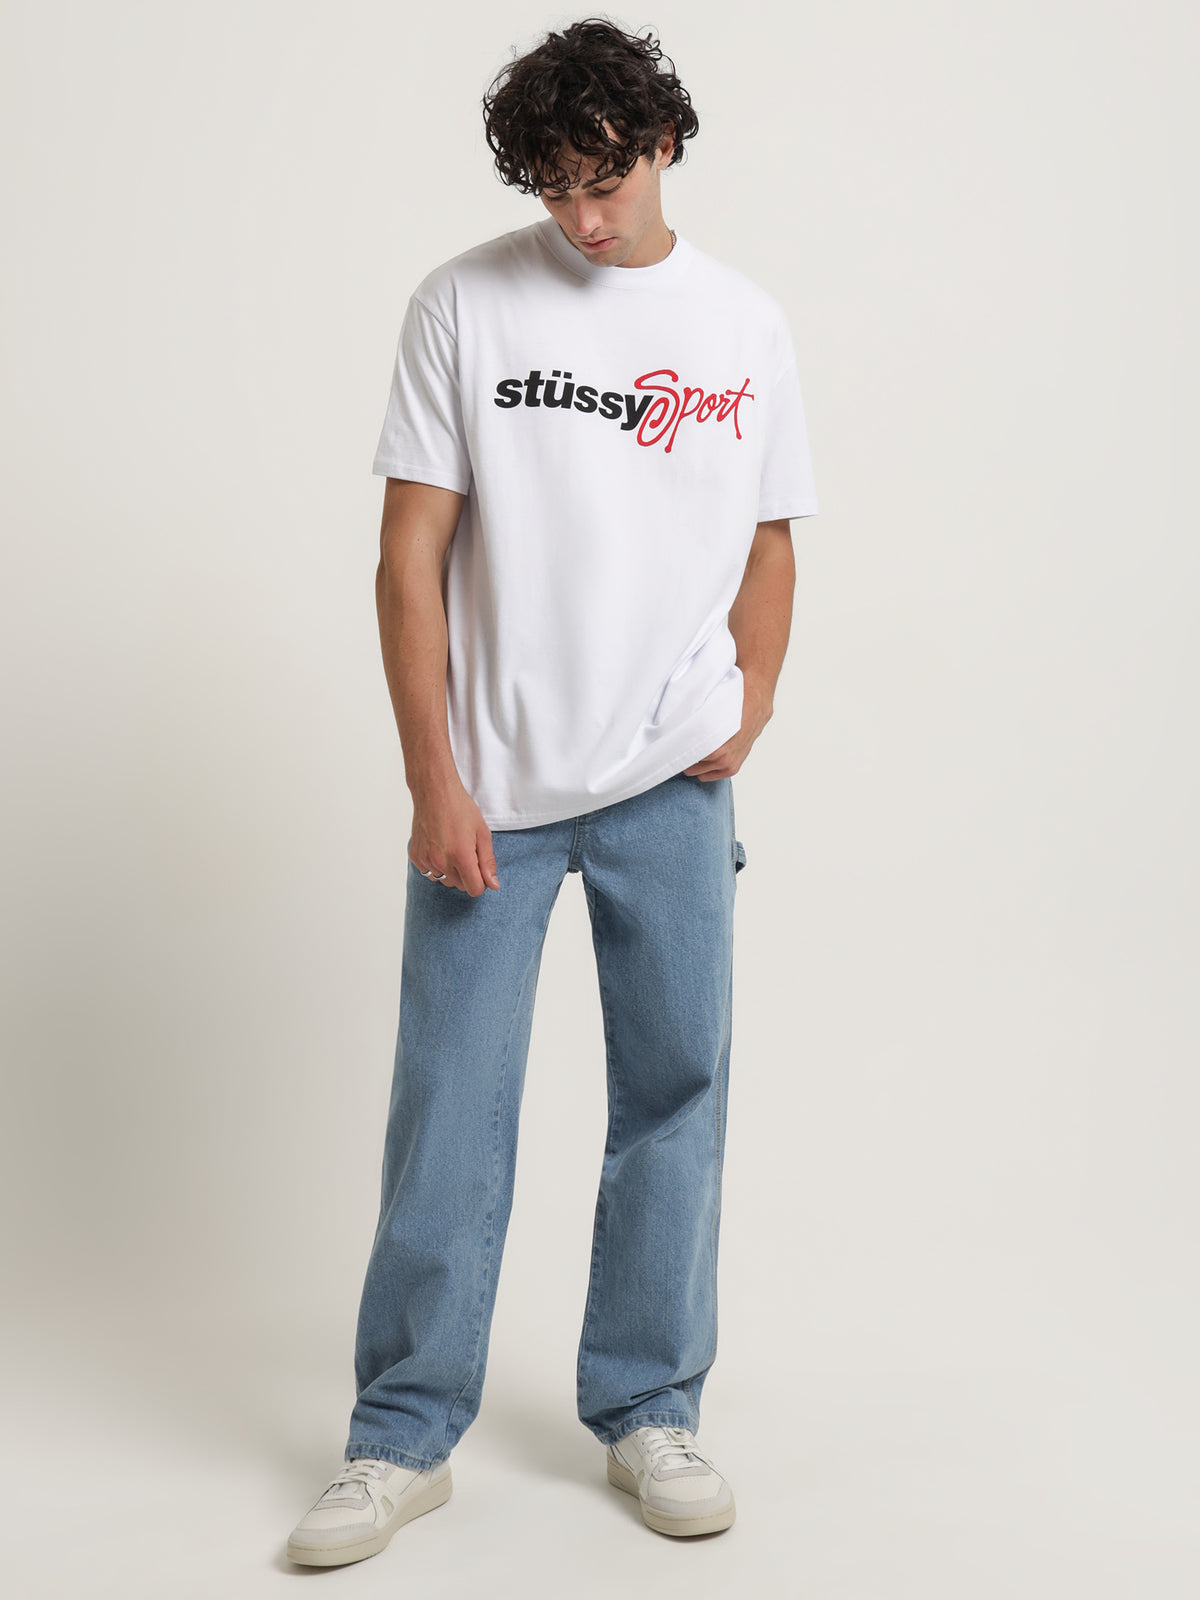 Stussy Sport 50-50 T-Shirt in White